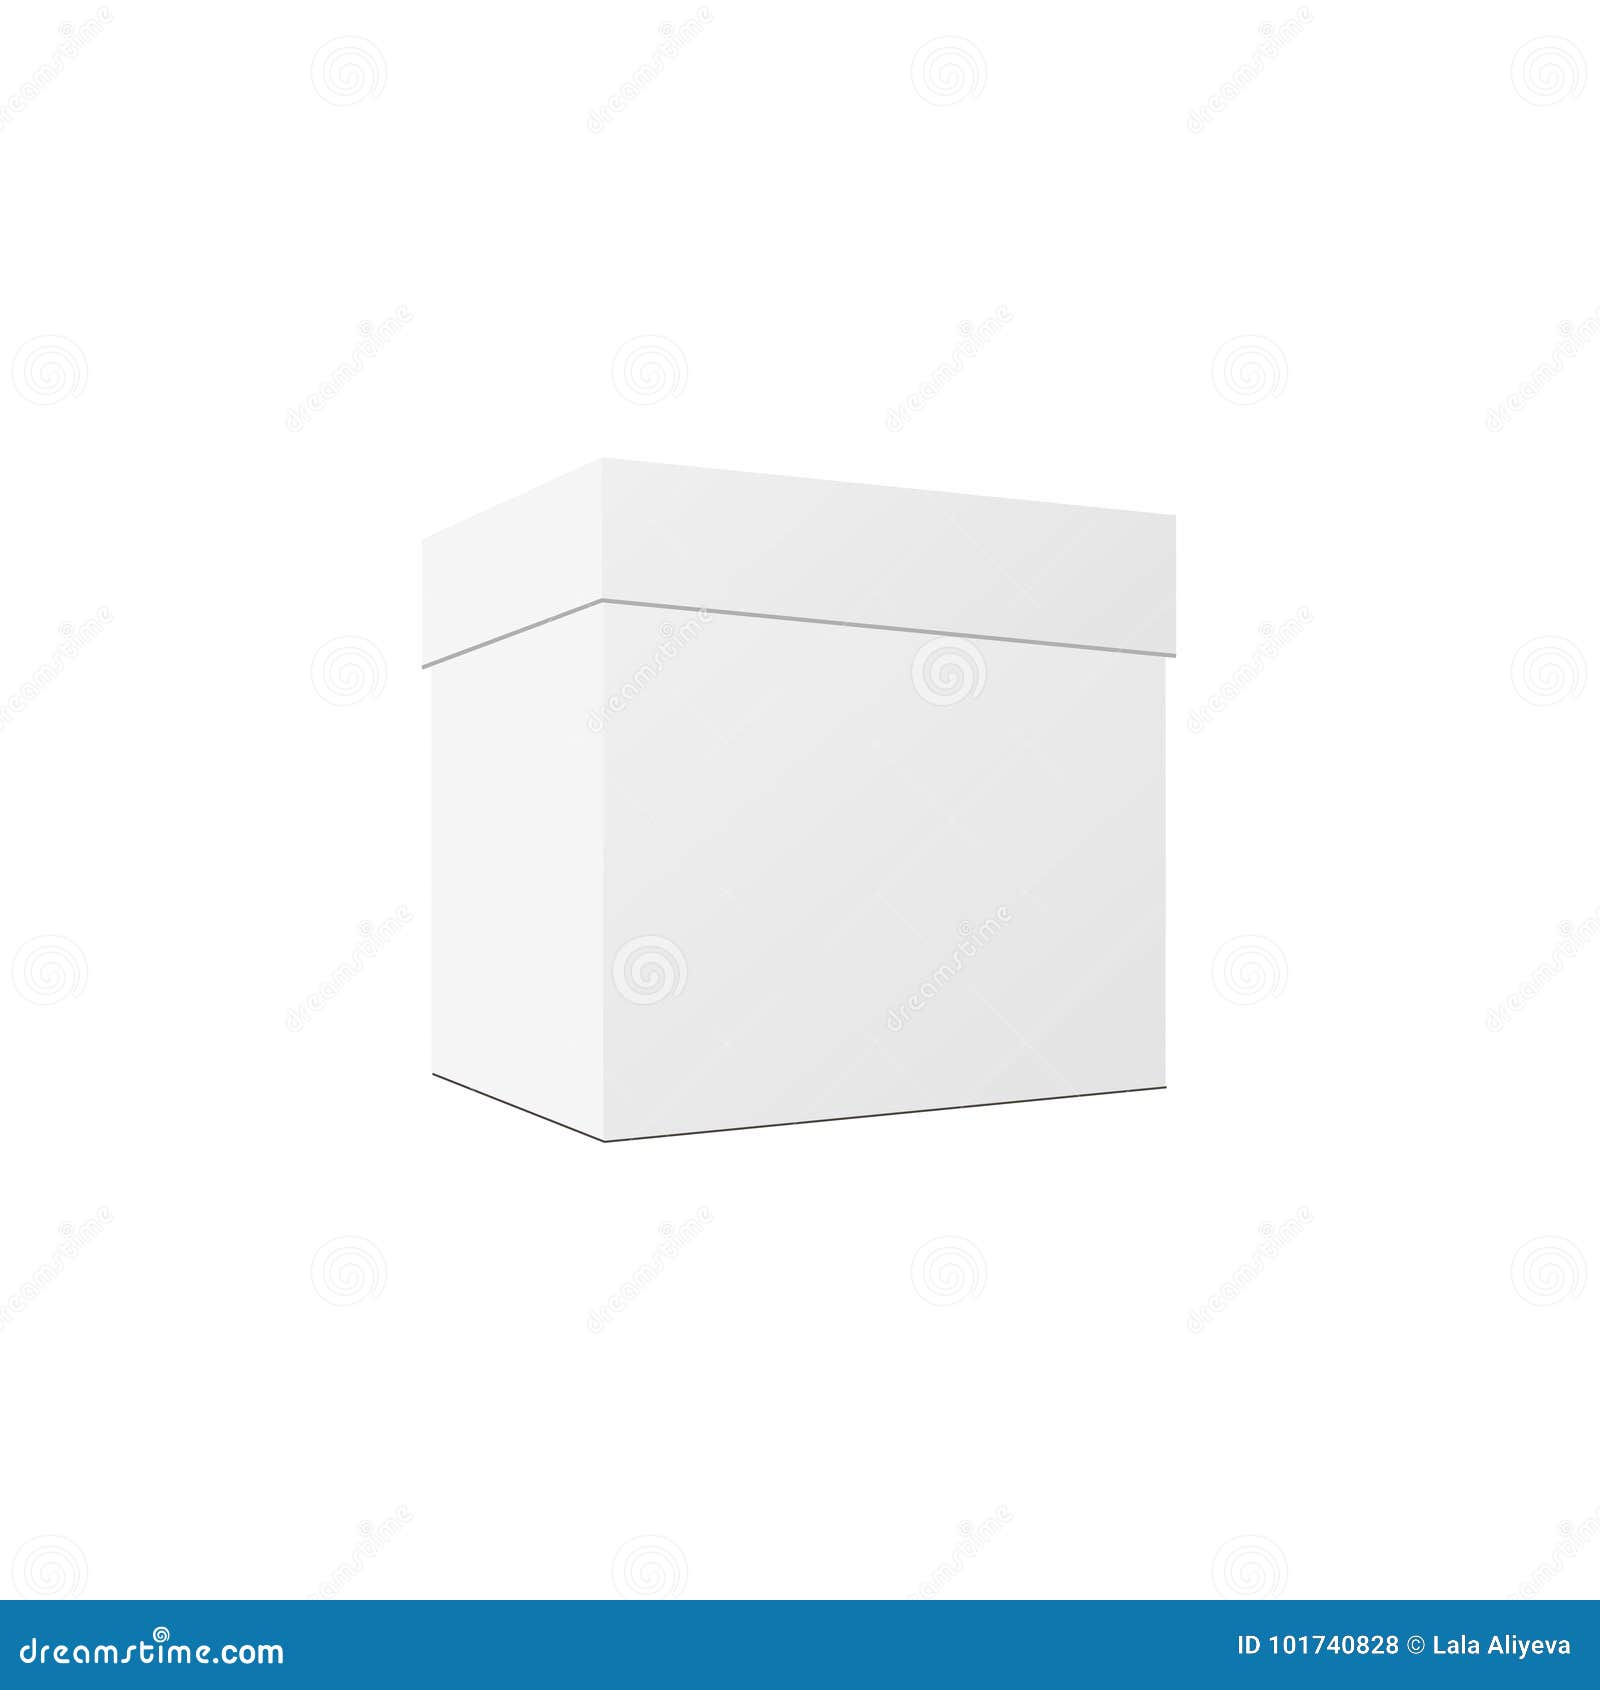 Download Blank White Vertical Rectangular Cardboard Box. Vector ...